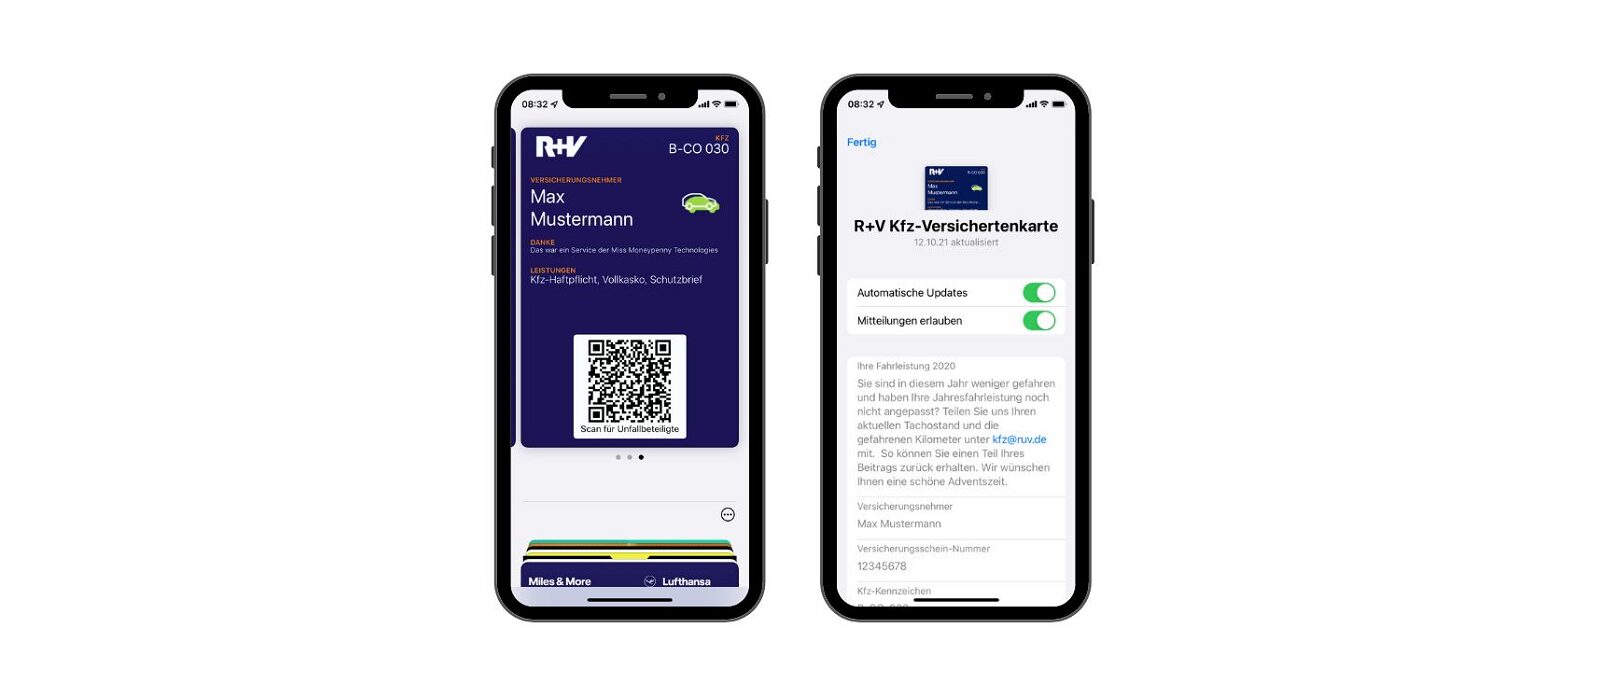 R+V insurance cards on phone - July 2022